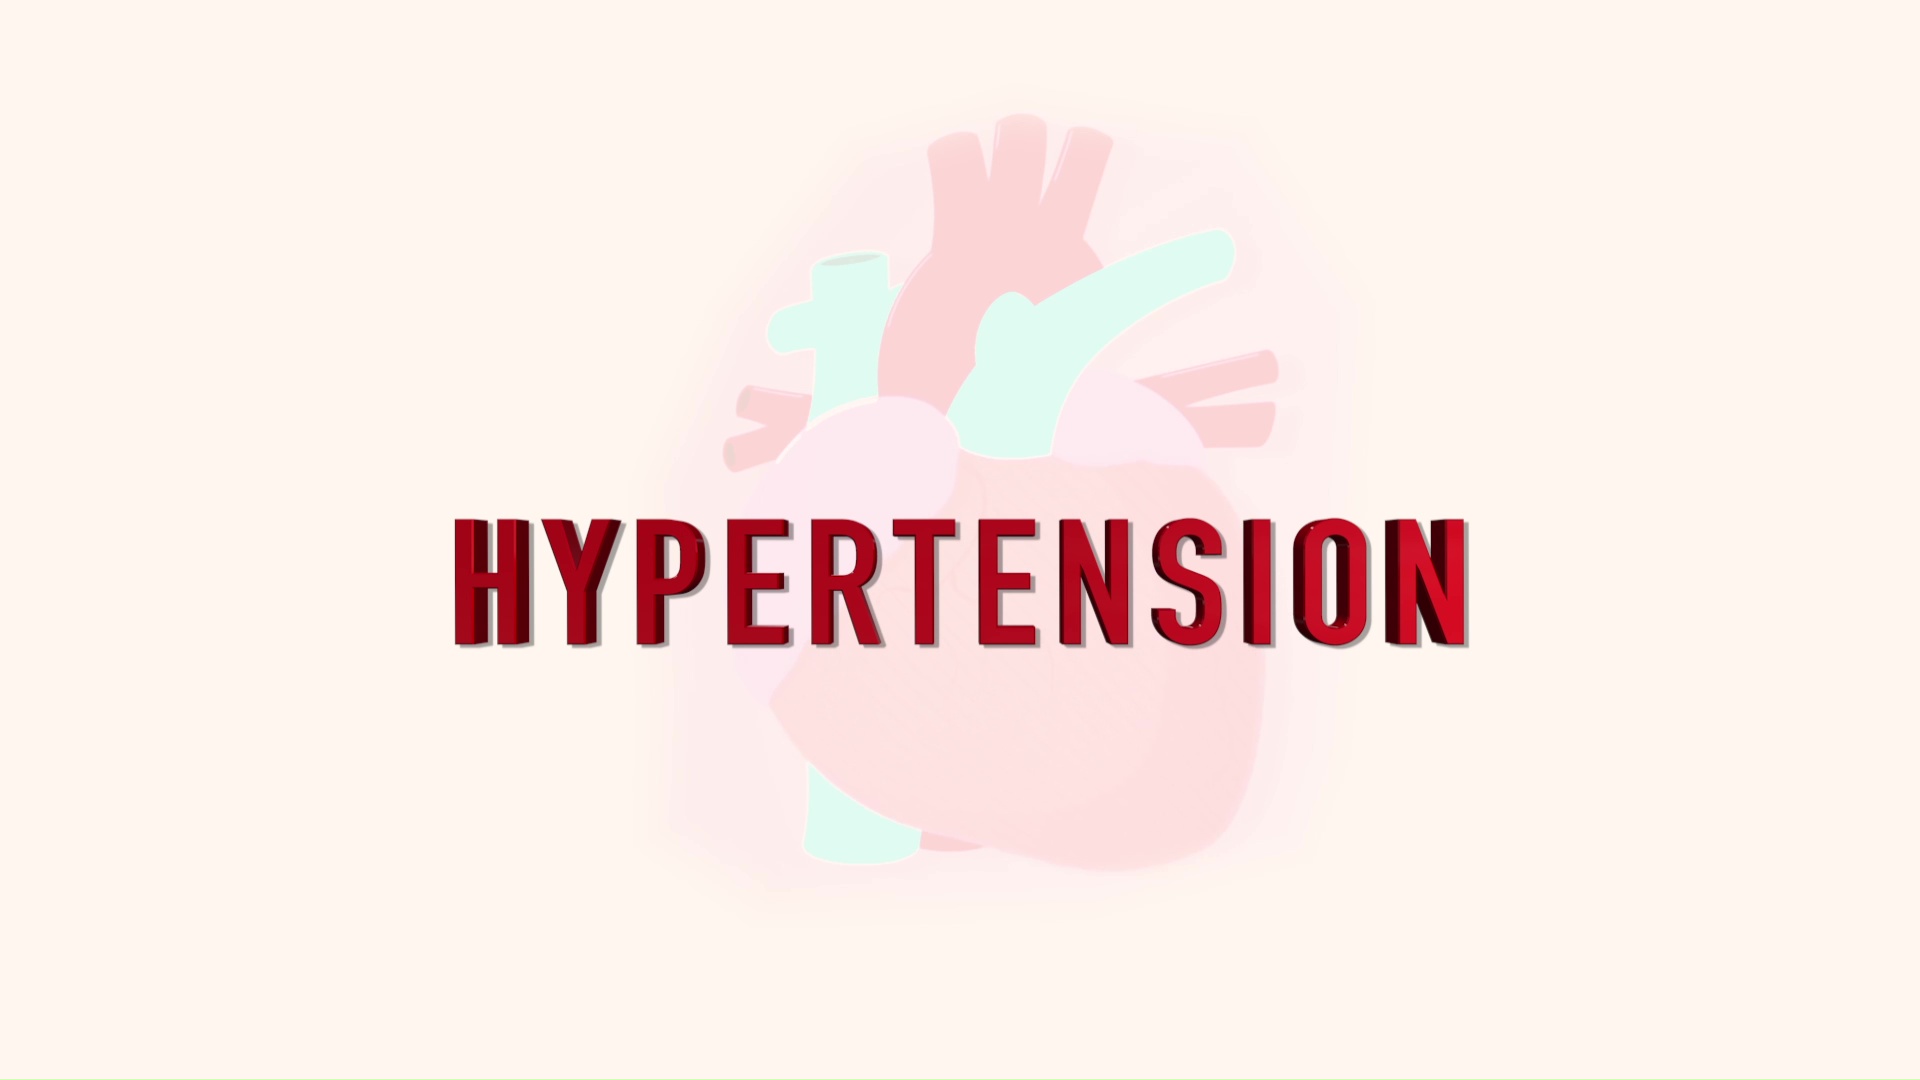 HYPERTENSION